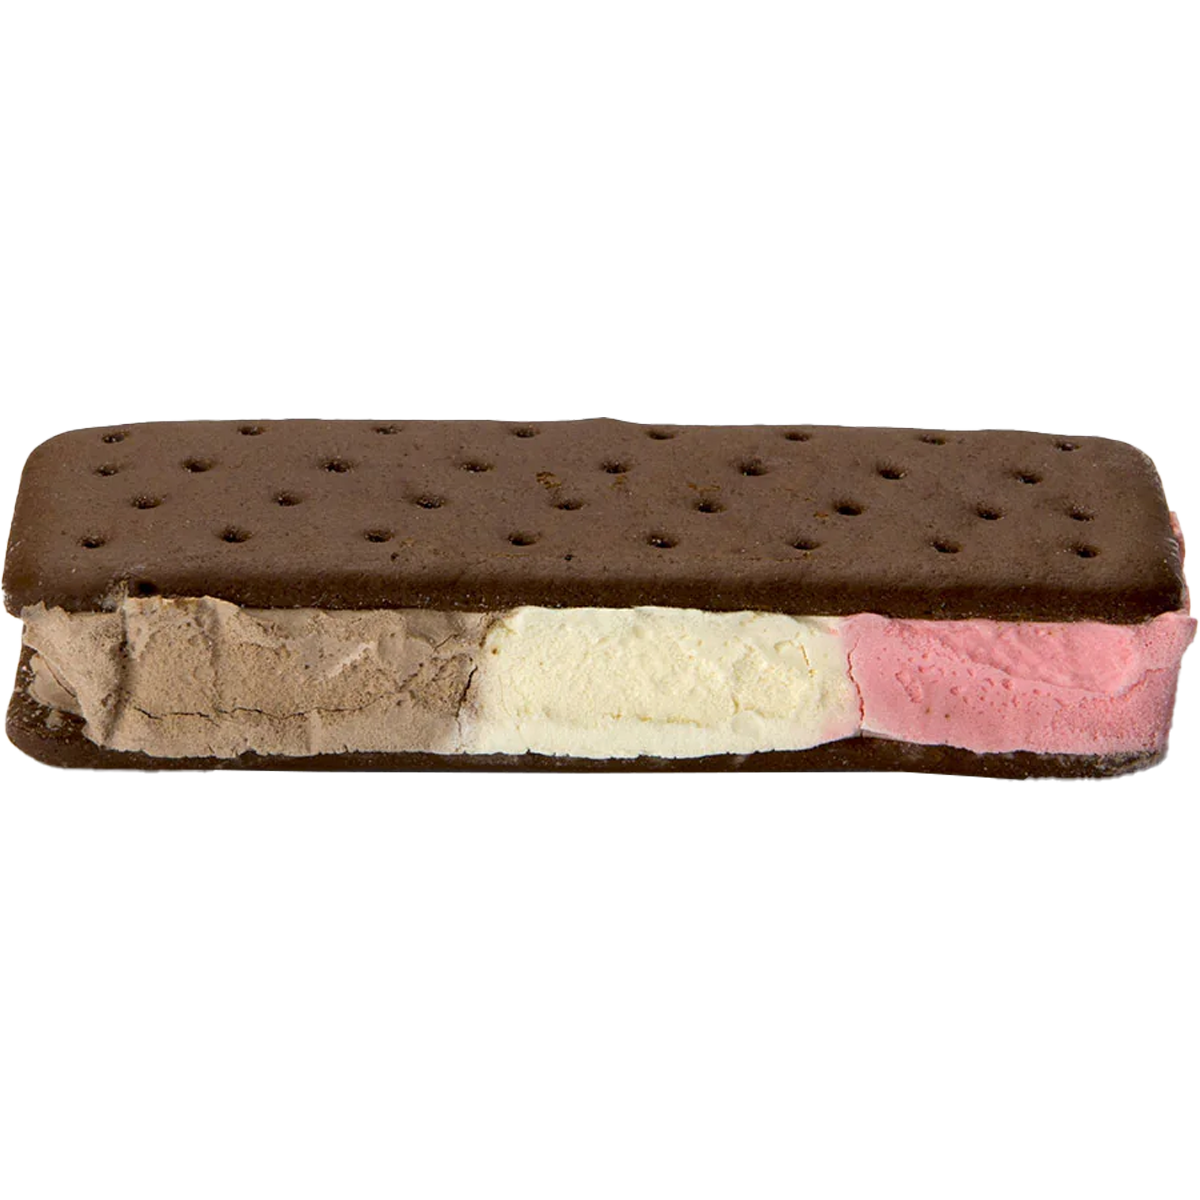 Neapolitan Ice Cream Sandwich (1 Serving) alternate view